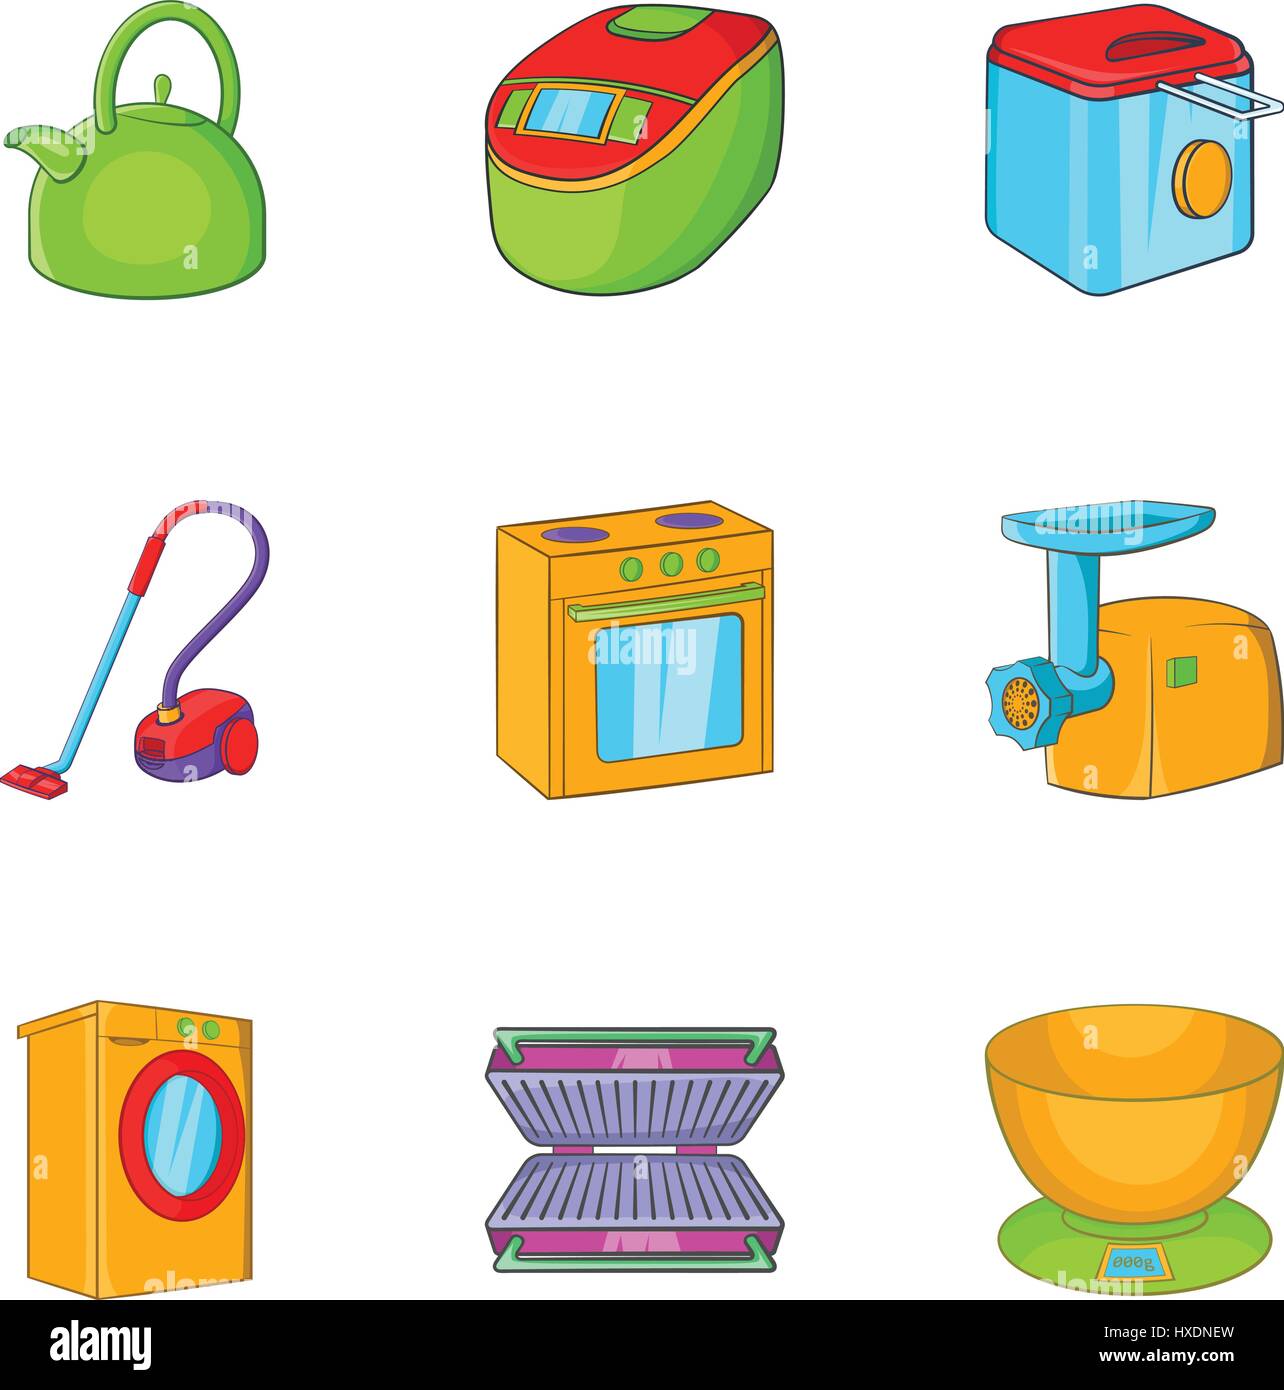 Appliances icons set, cartoon style Stock Vector